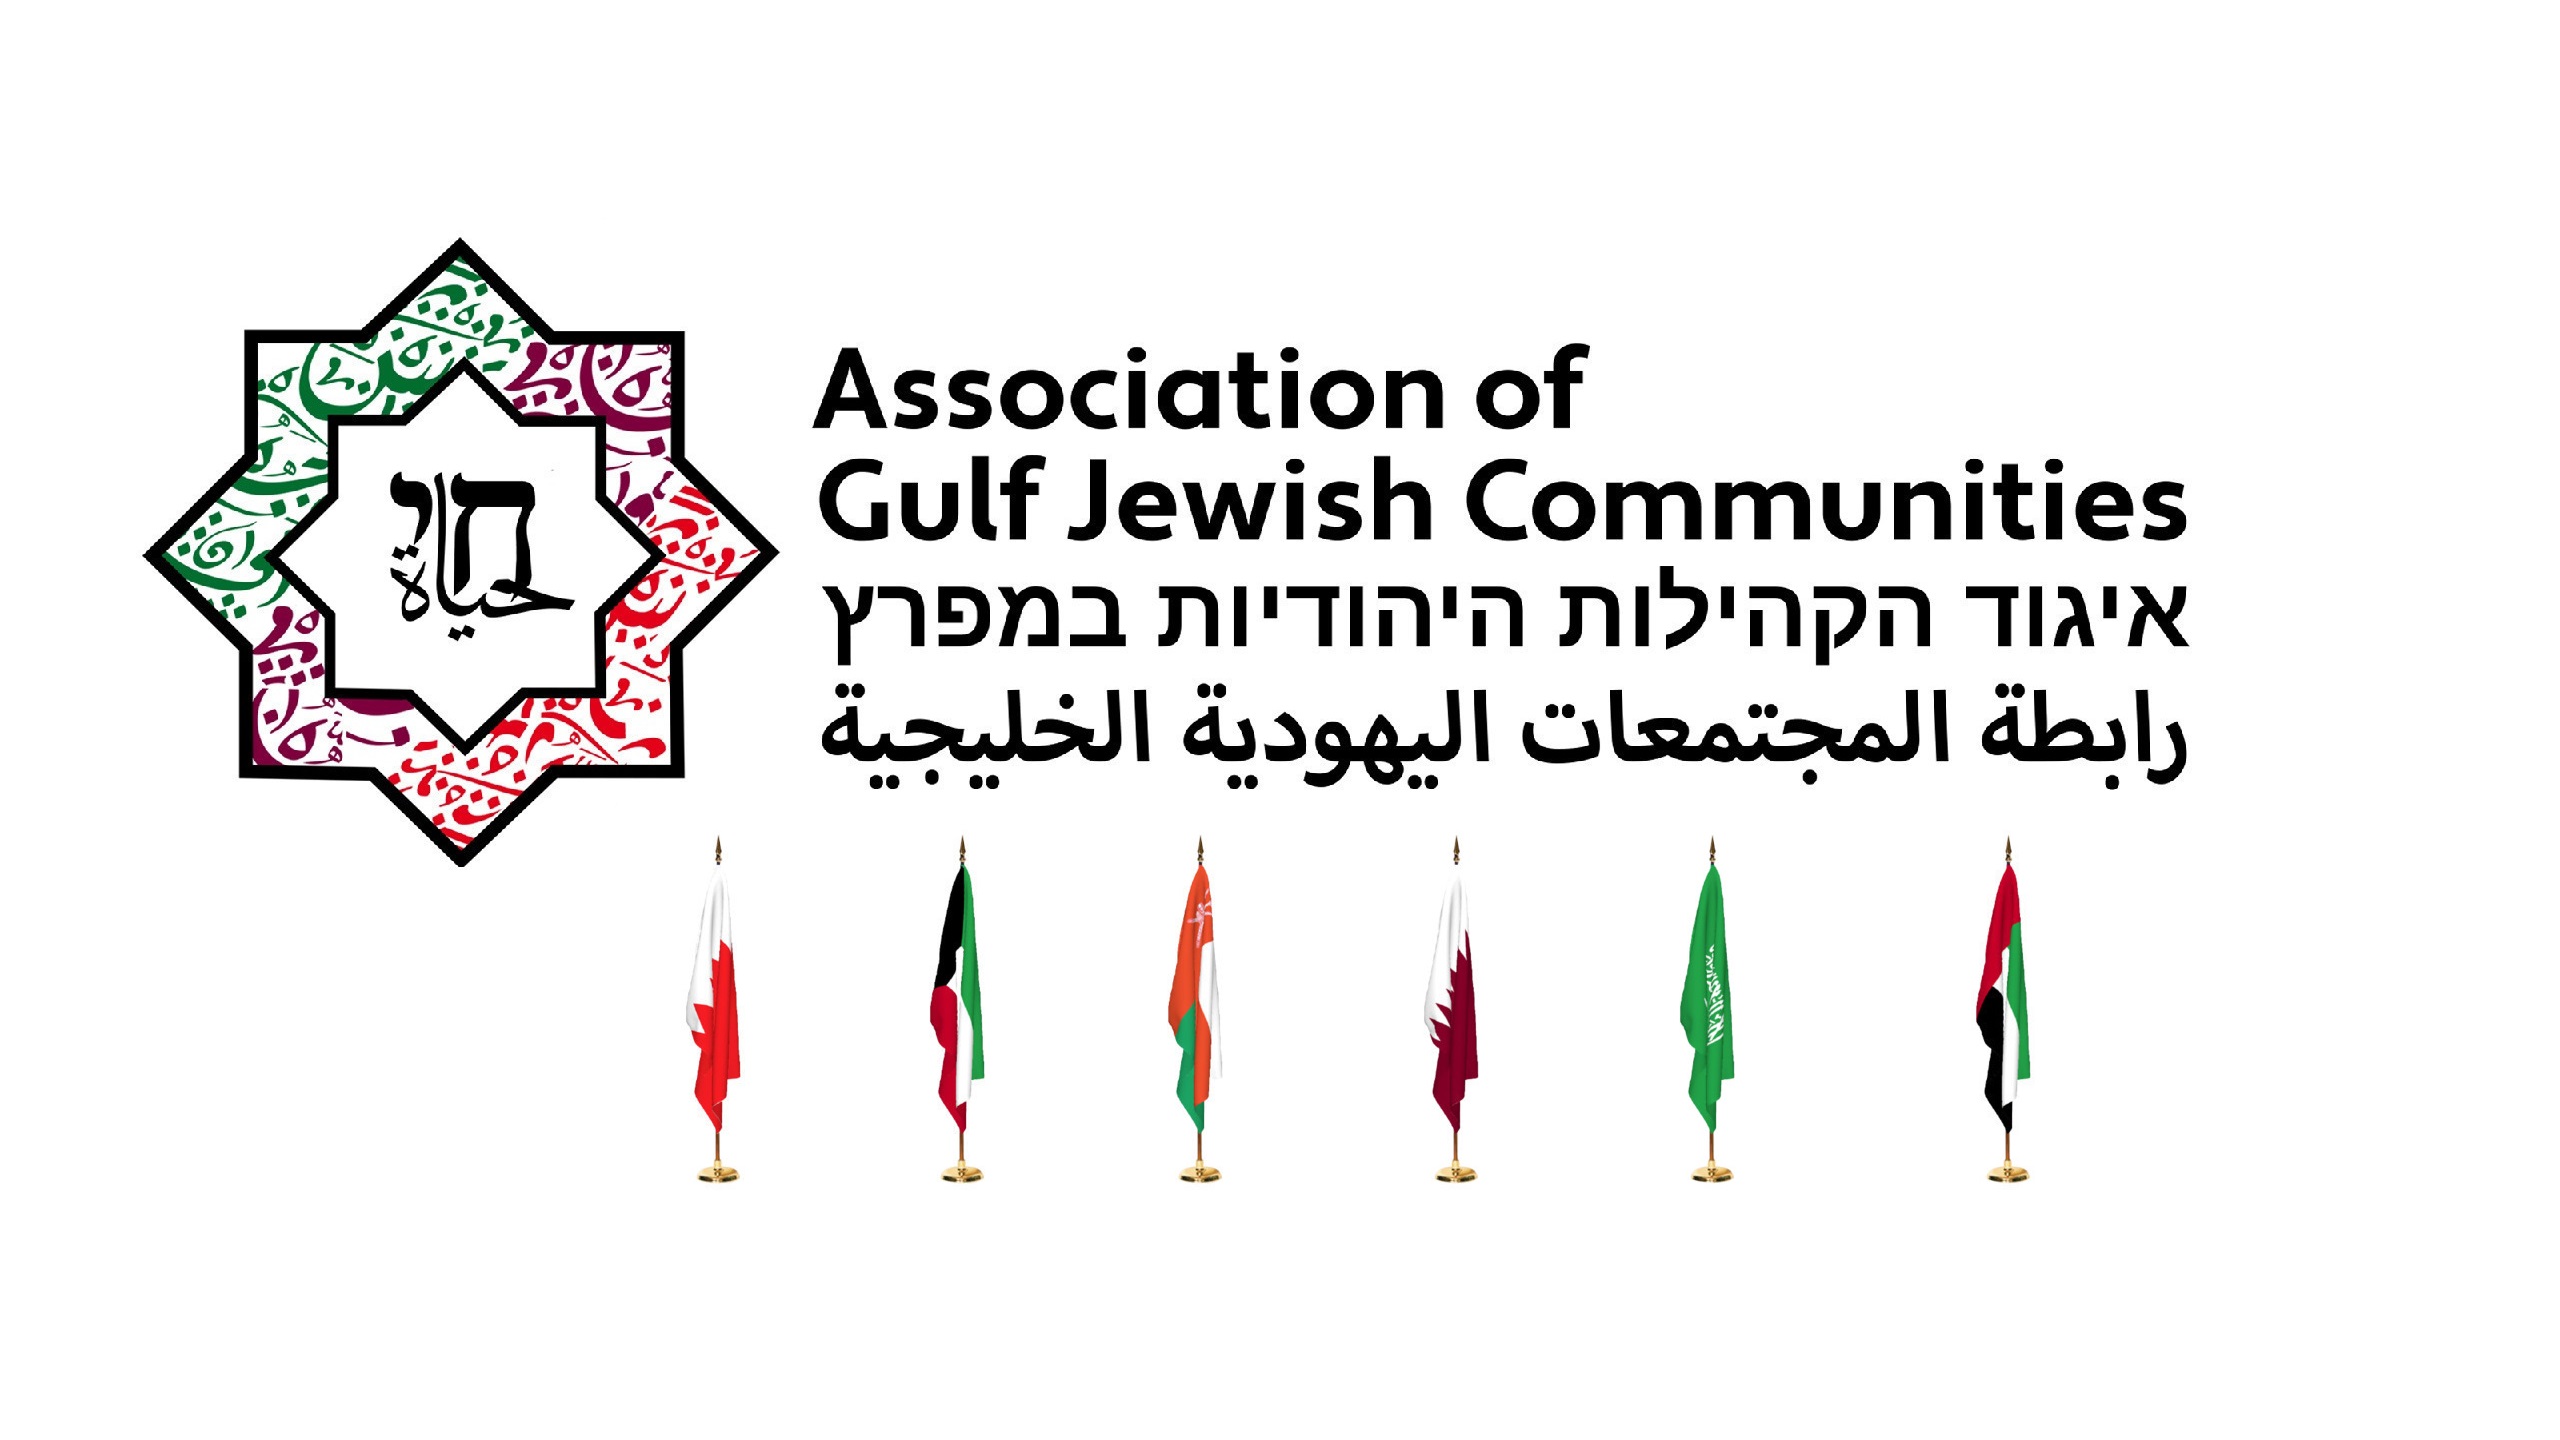 Jews in Arabia Establish Umbrella Association, Beth Din